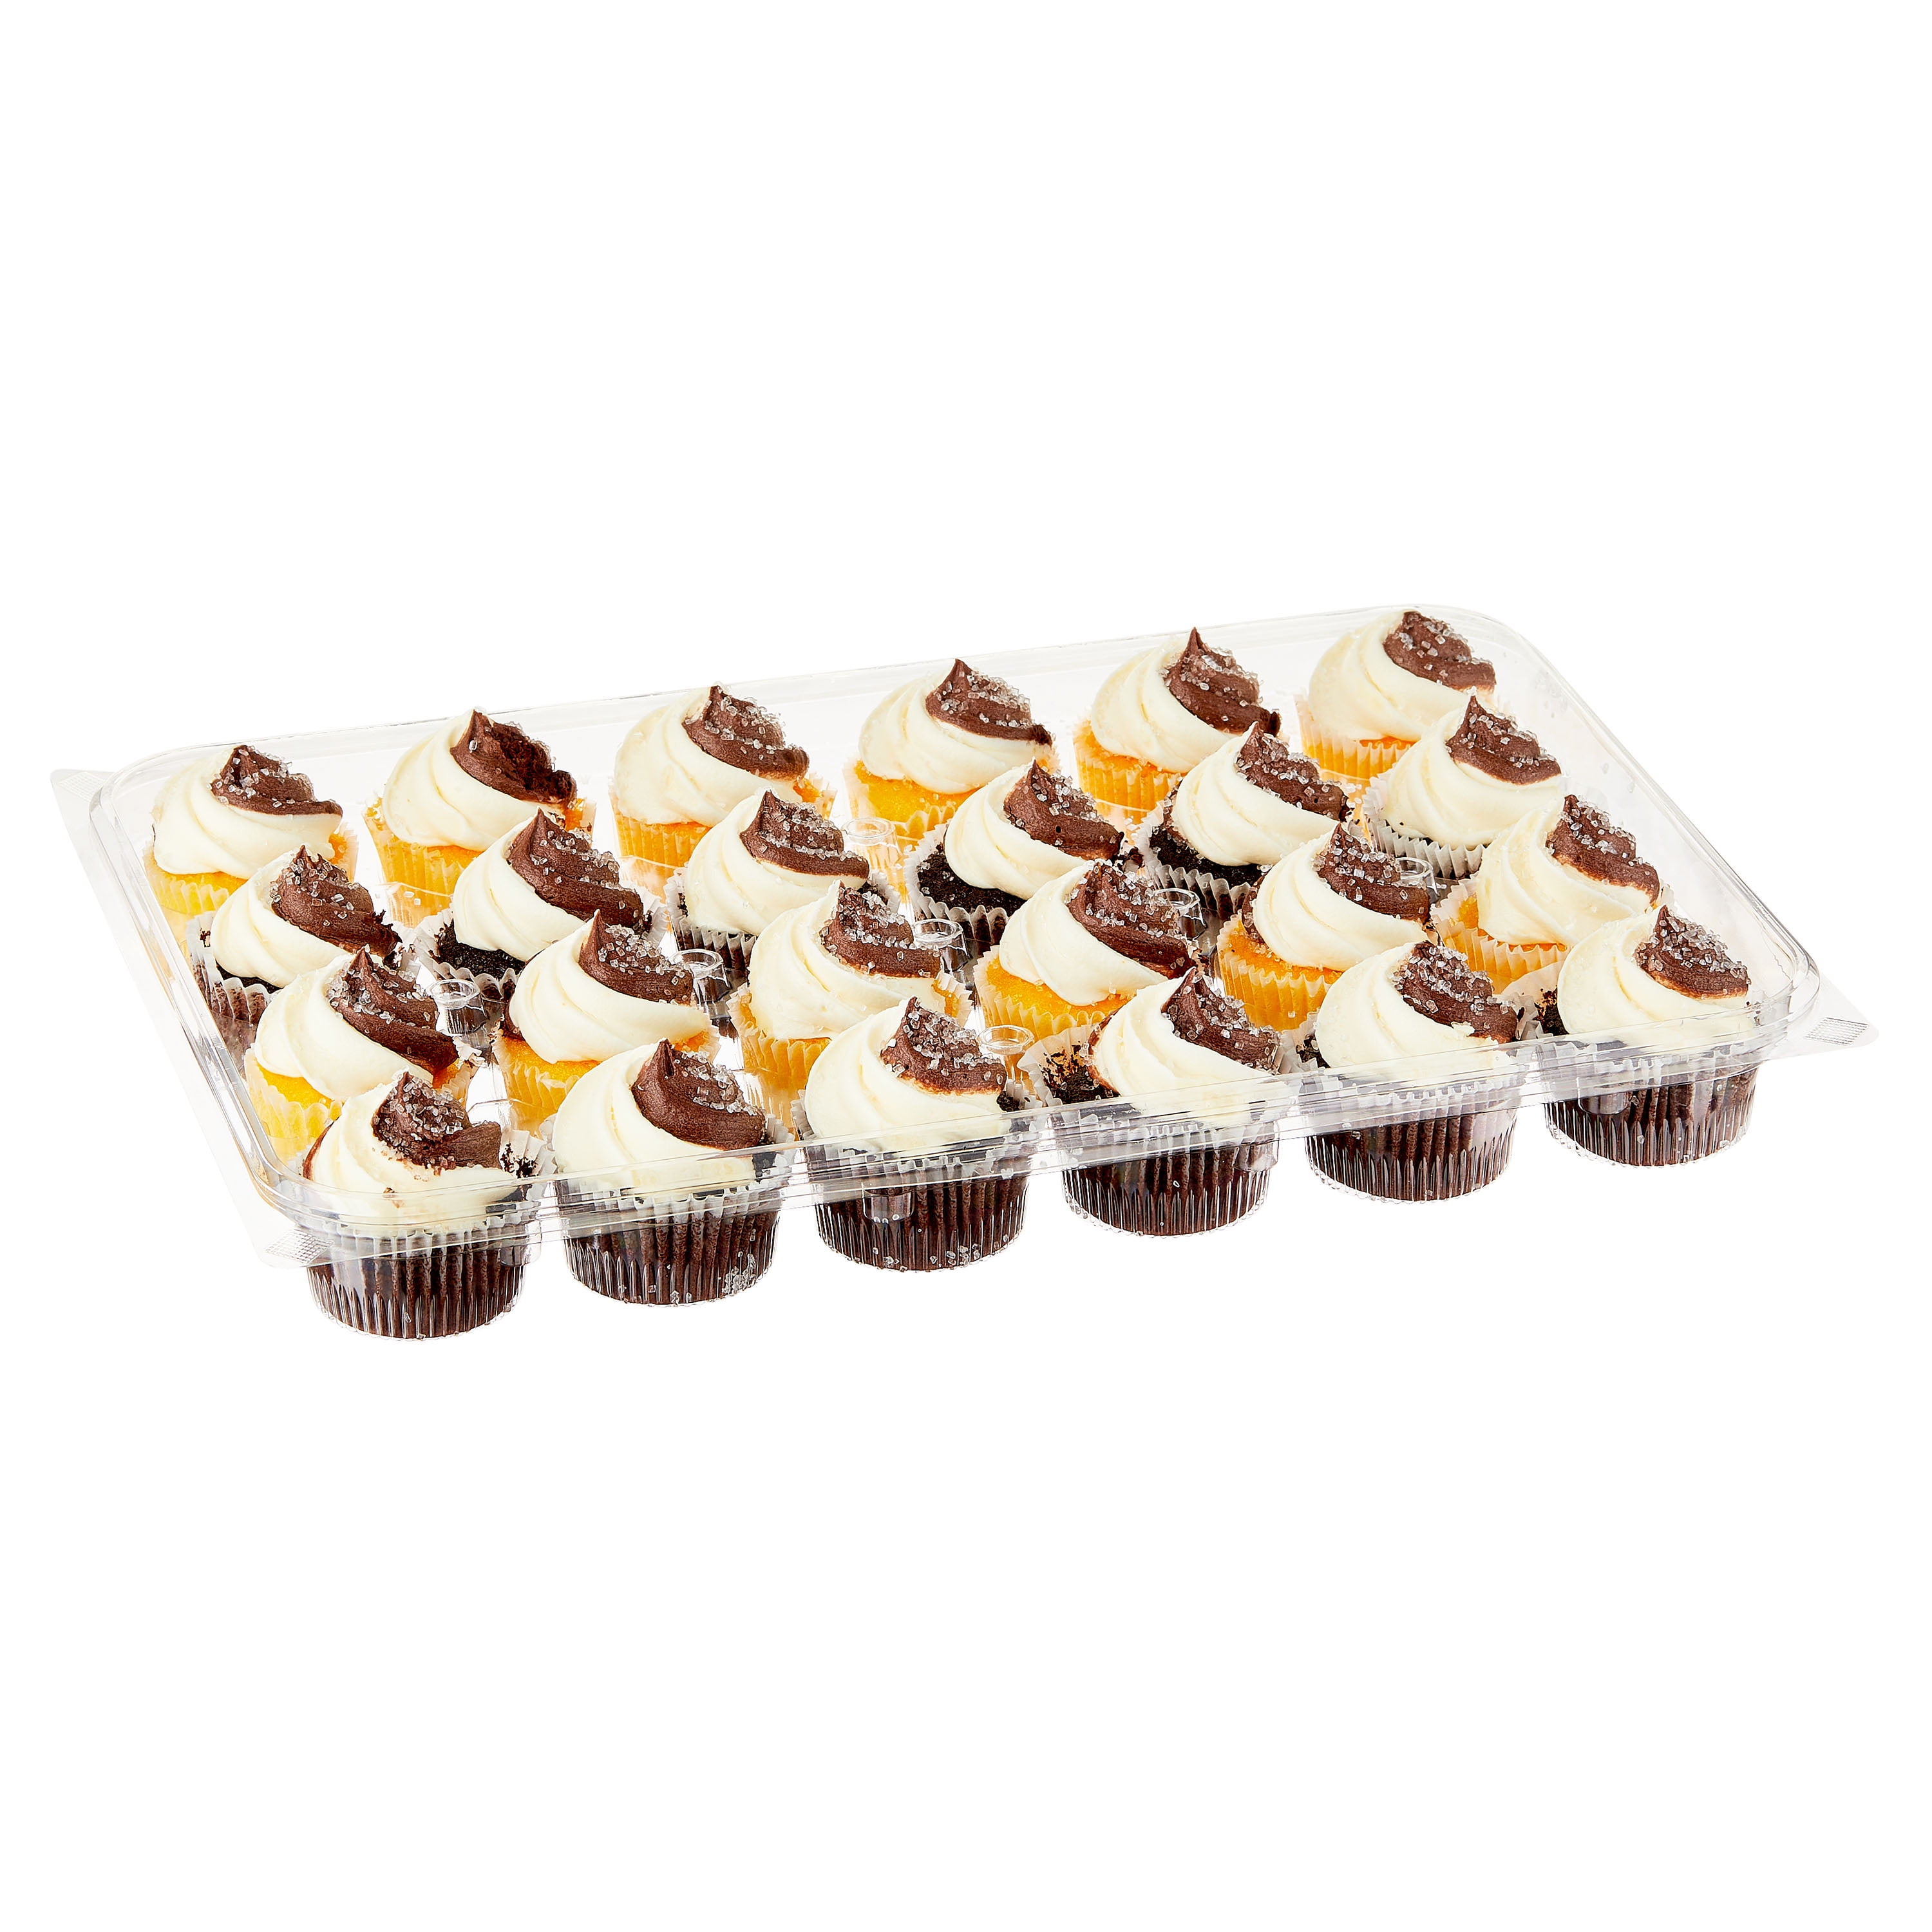 Mini White Baking Cups - 100ct - Favorite Day™ : Target